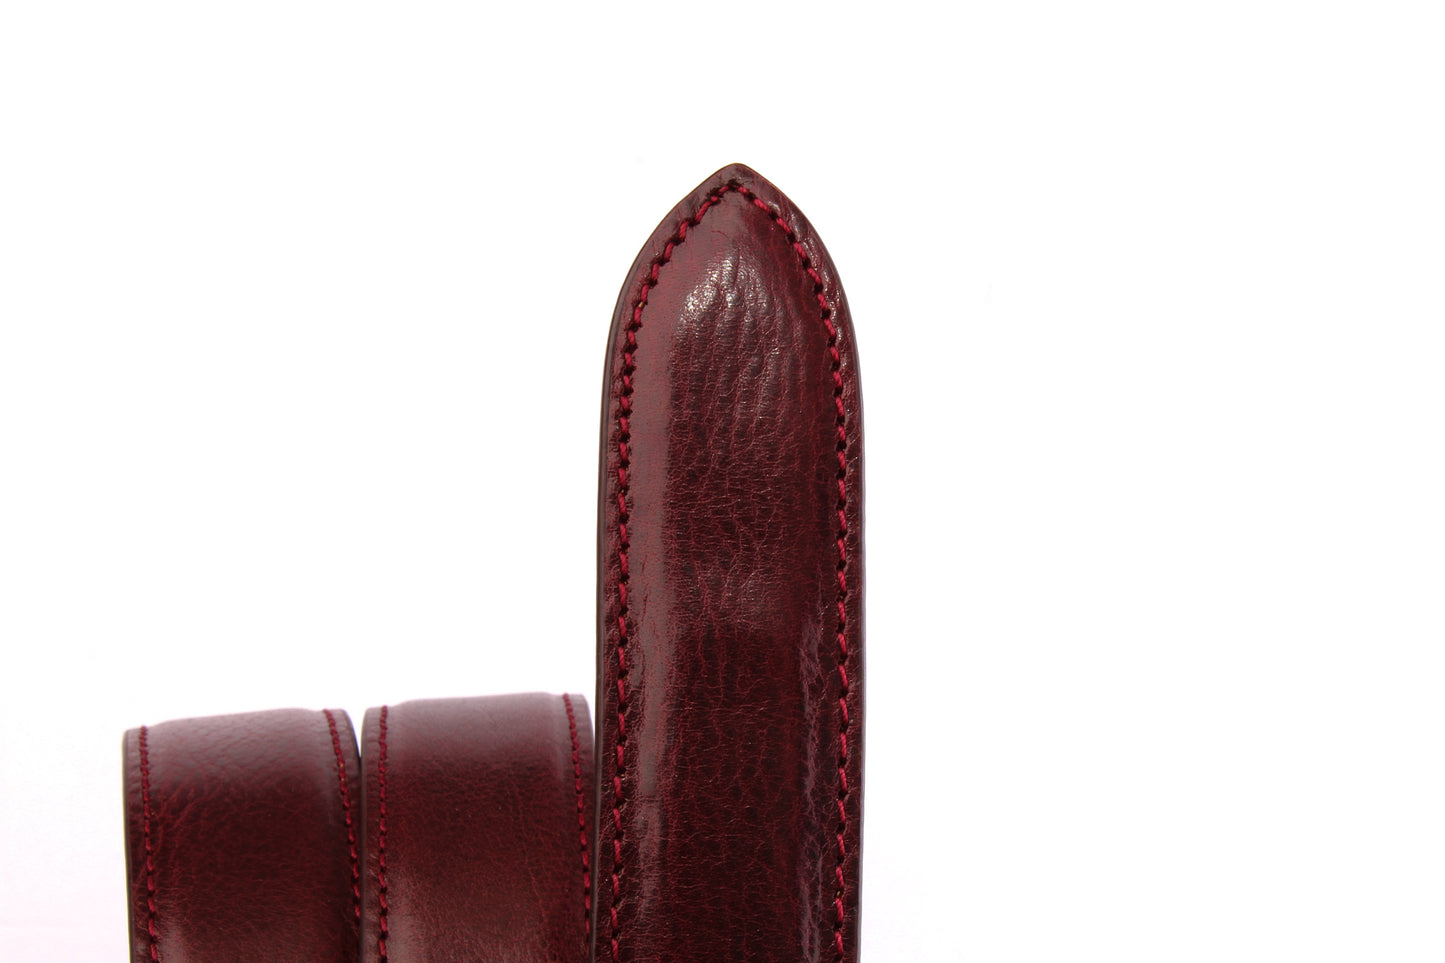 Men's Italian calfskin belt strap in merlot with a 1.25-inch width, formal look, tip of the strap